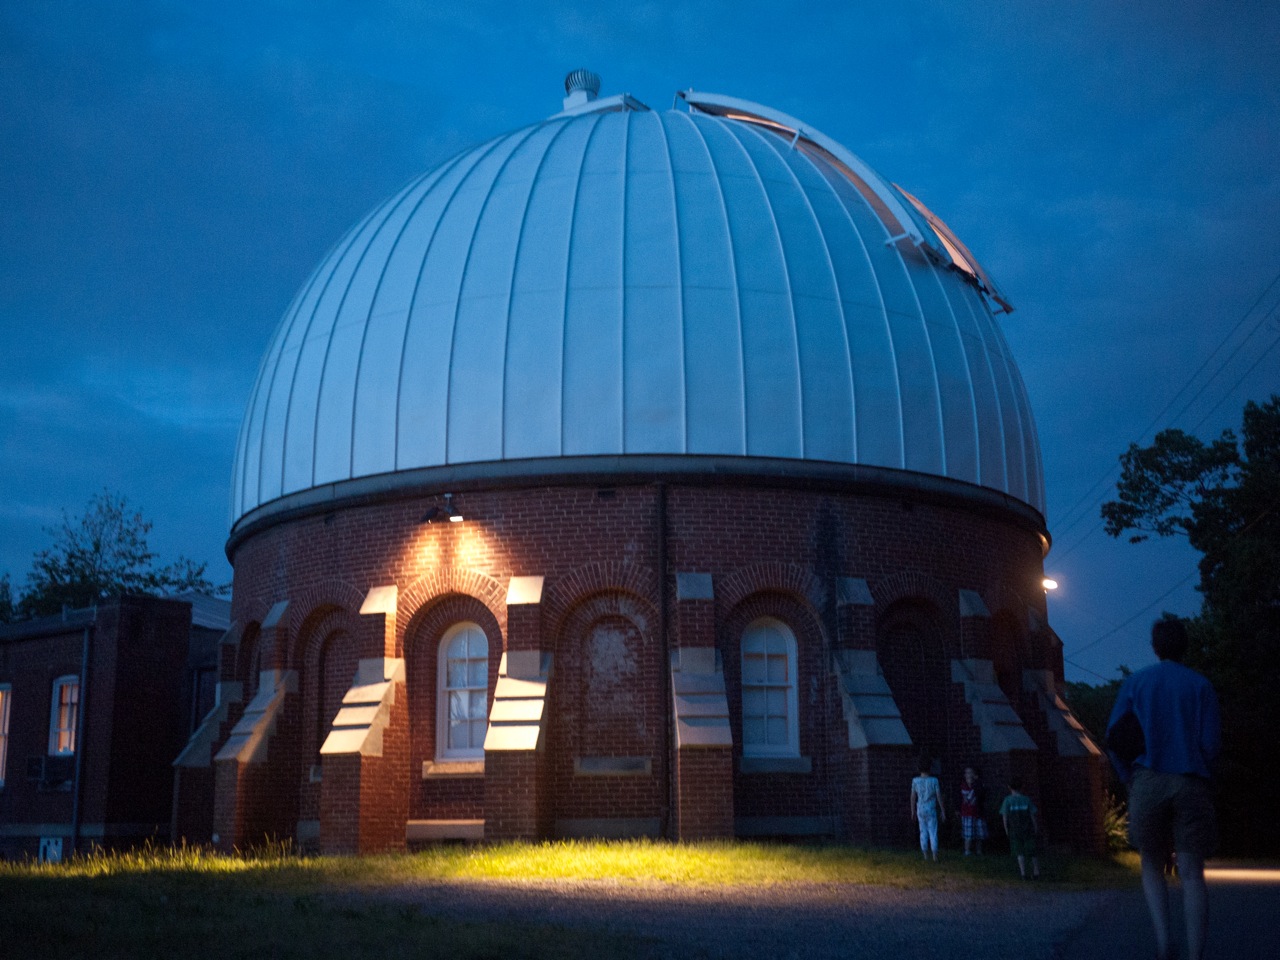 McCormick Observatory